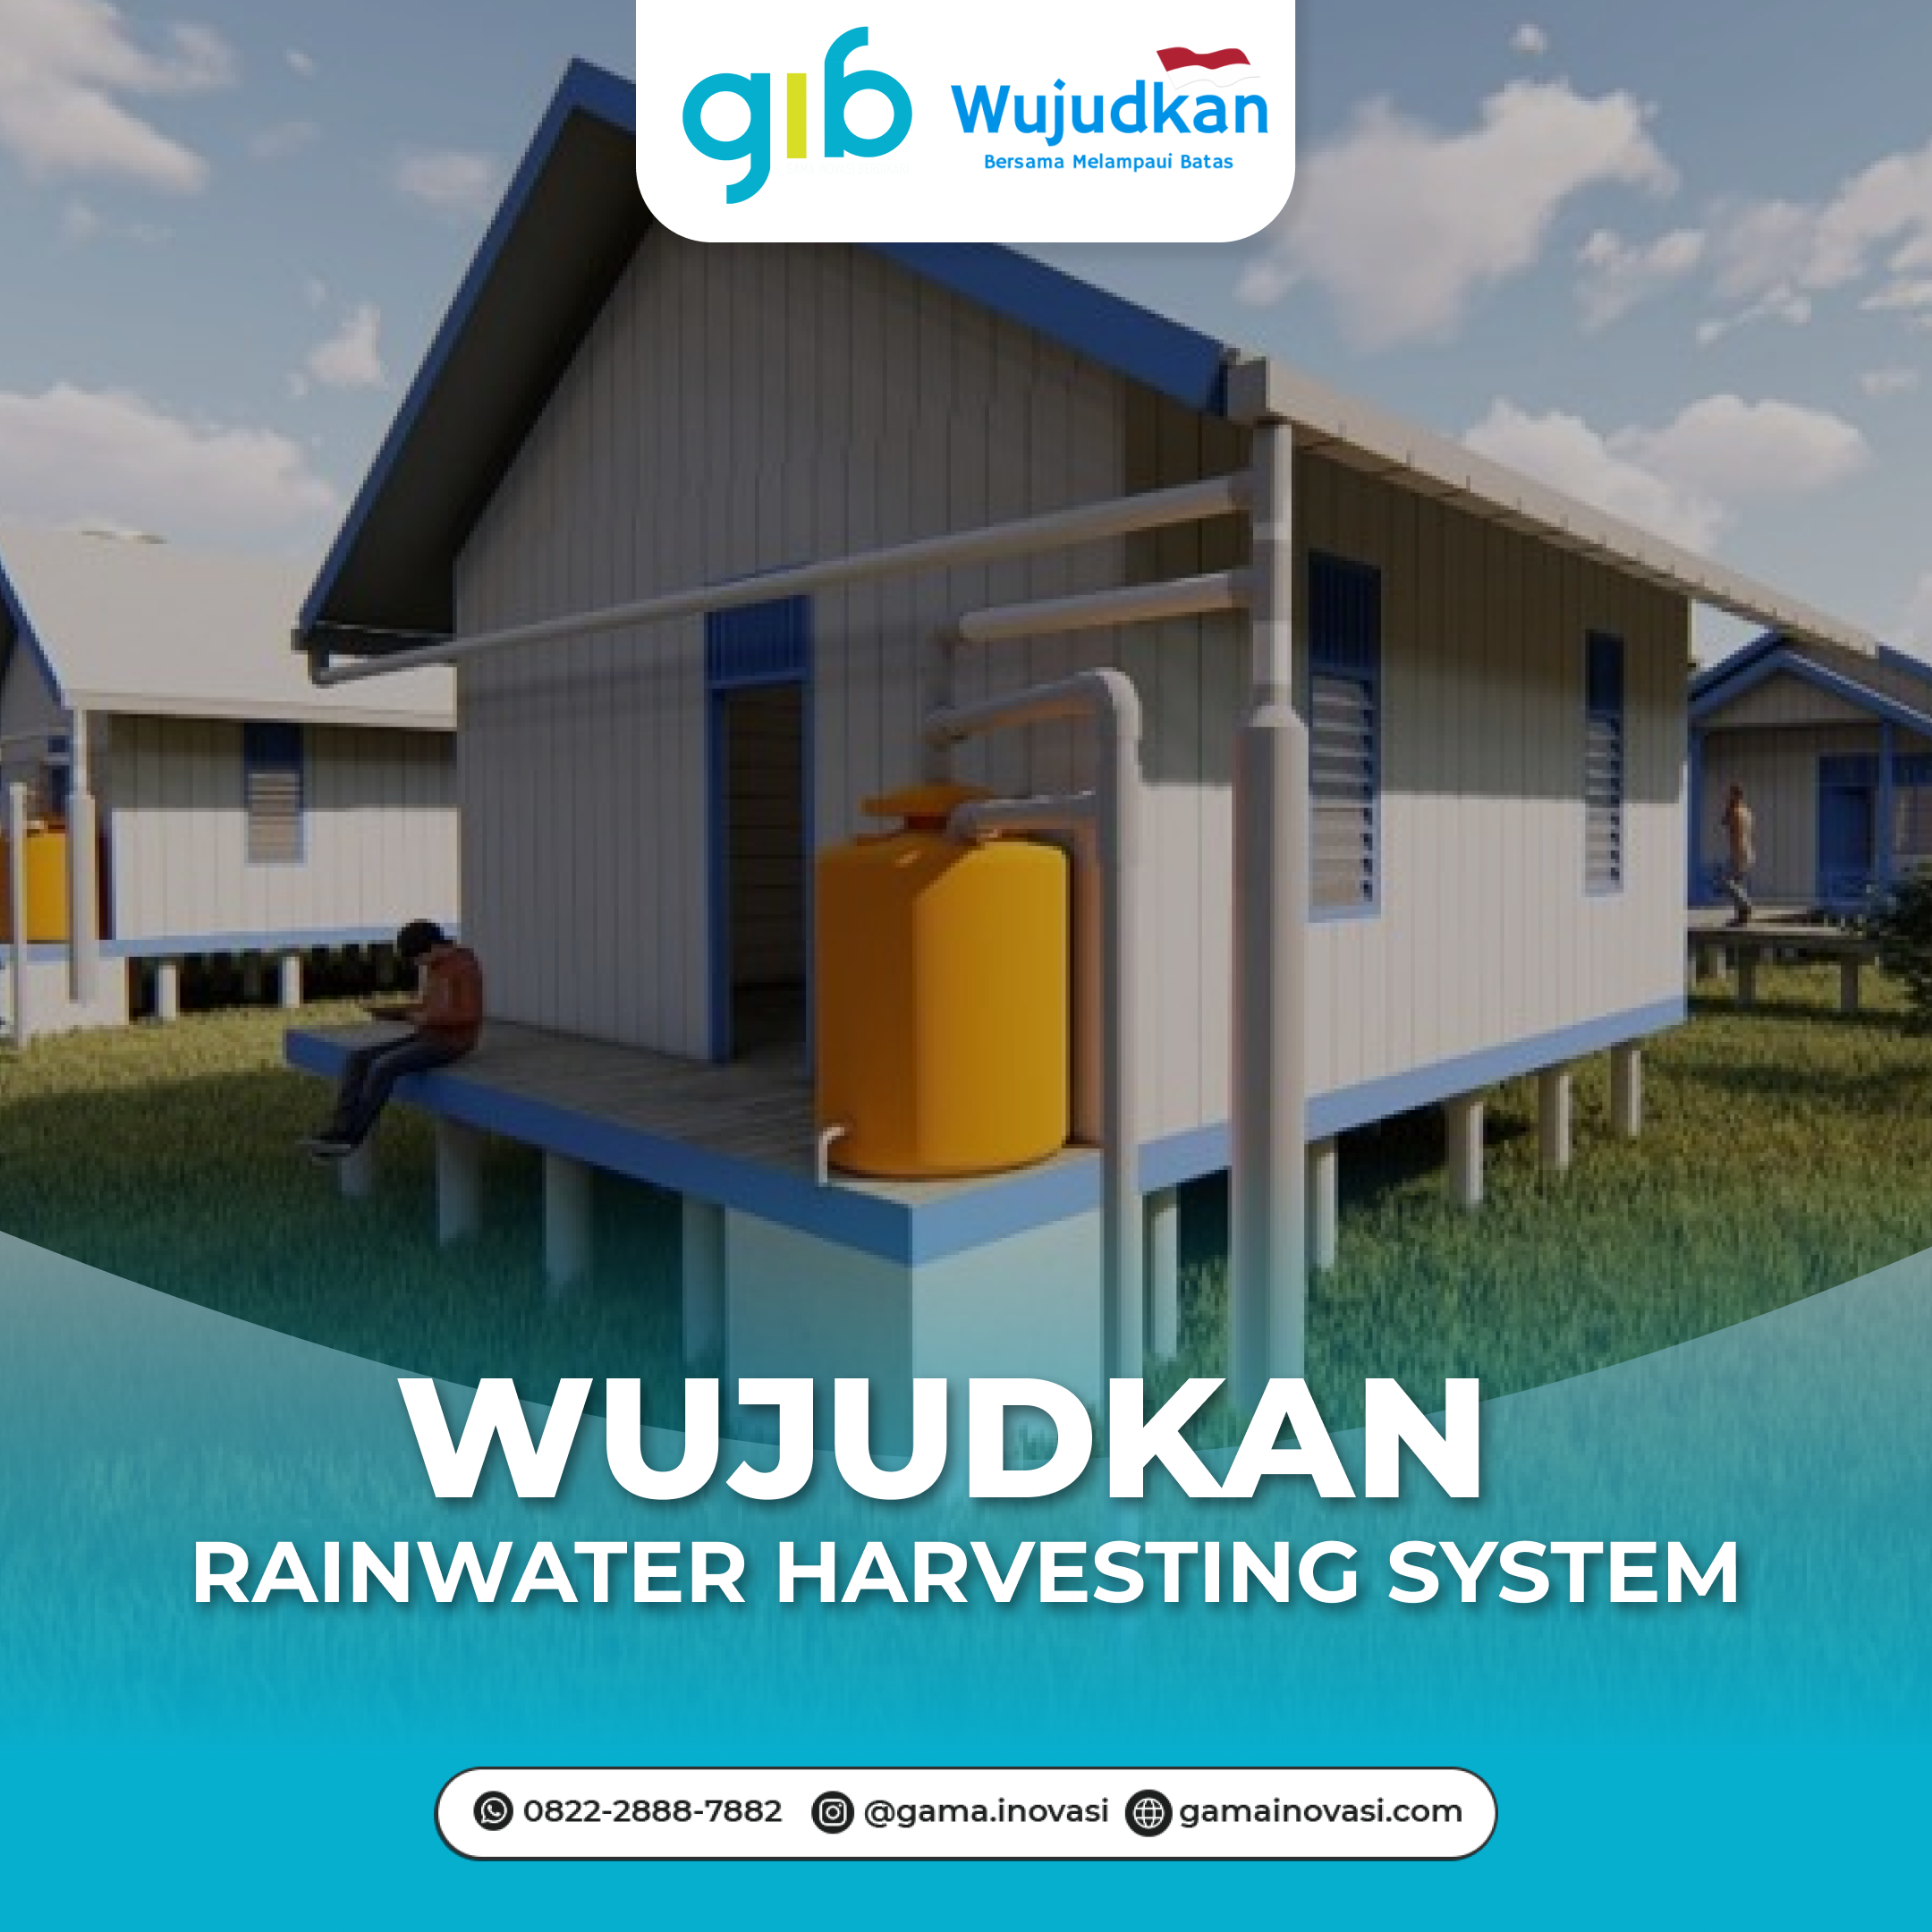 Wujudkan: Rainwater Harvesting System